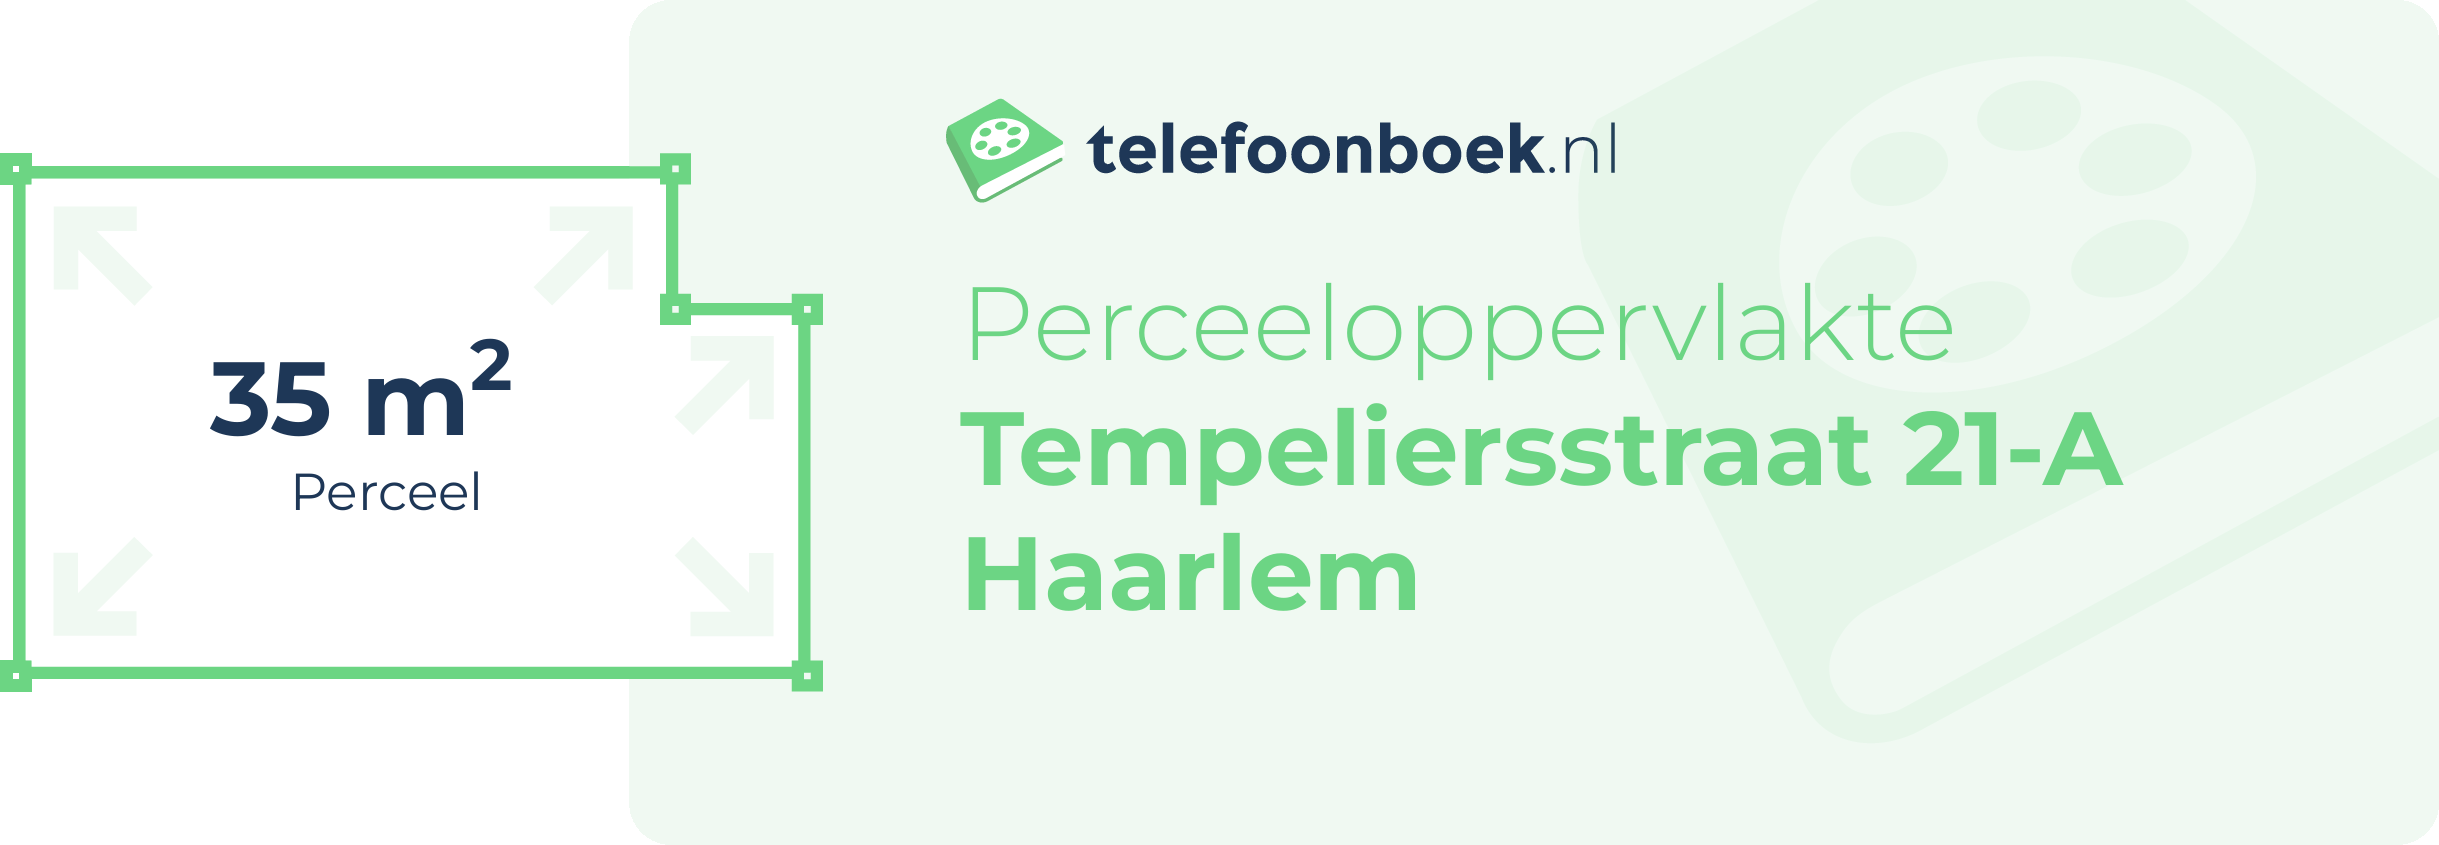 Perceeloppervlakte Tempeliersstraat 21-A Haarlem